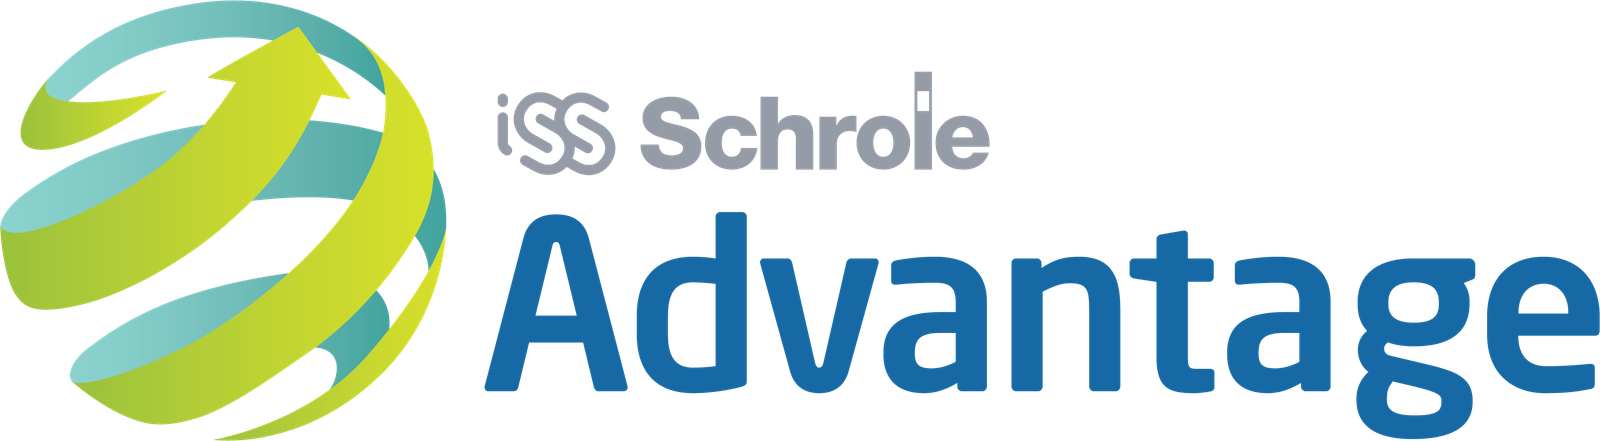 International Schools Services Logo